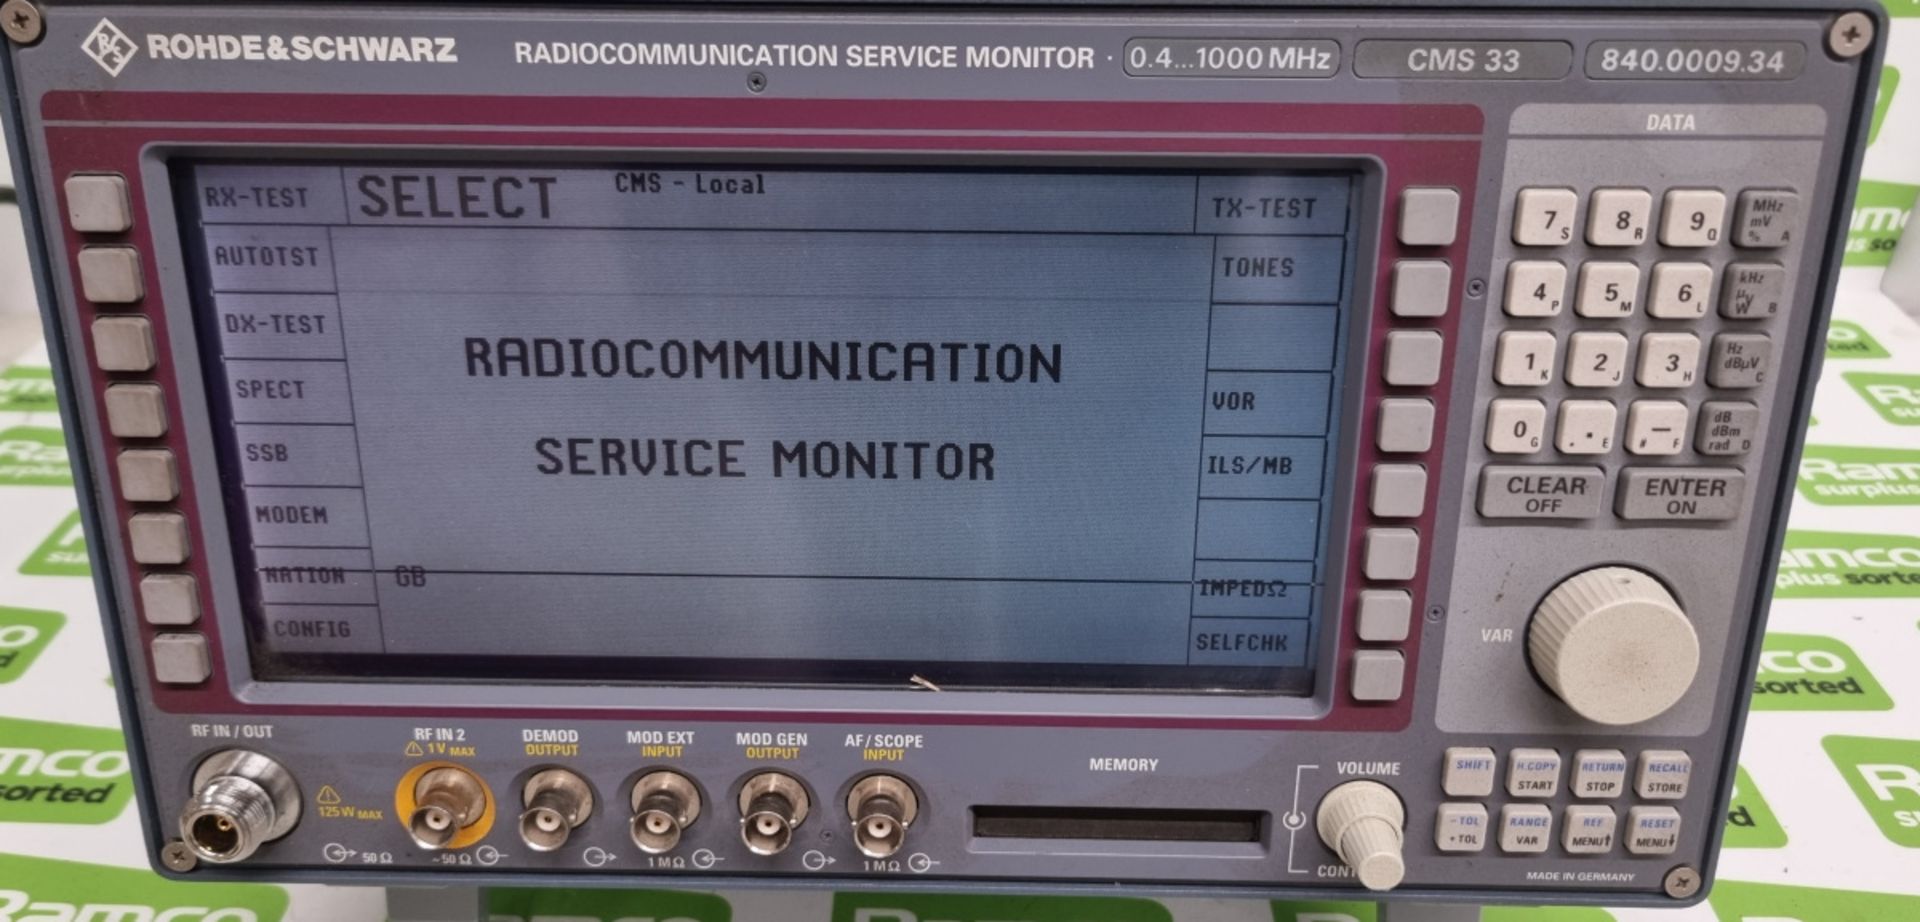 Rohde & Schwarz CMS33 Radiocommunication Service Monitor 0.4 - 1000mhz - 840.0009.34 no carry case o - Image 2 of 7